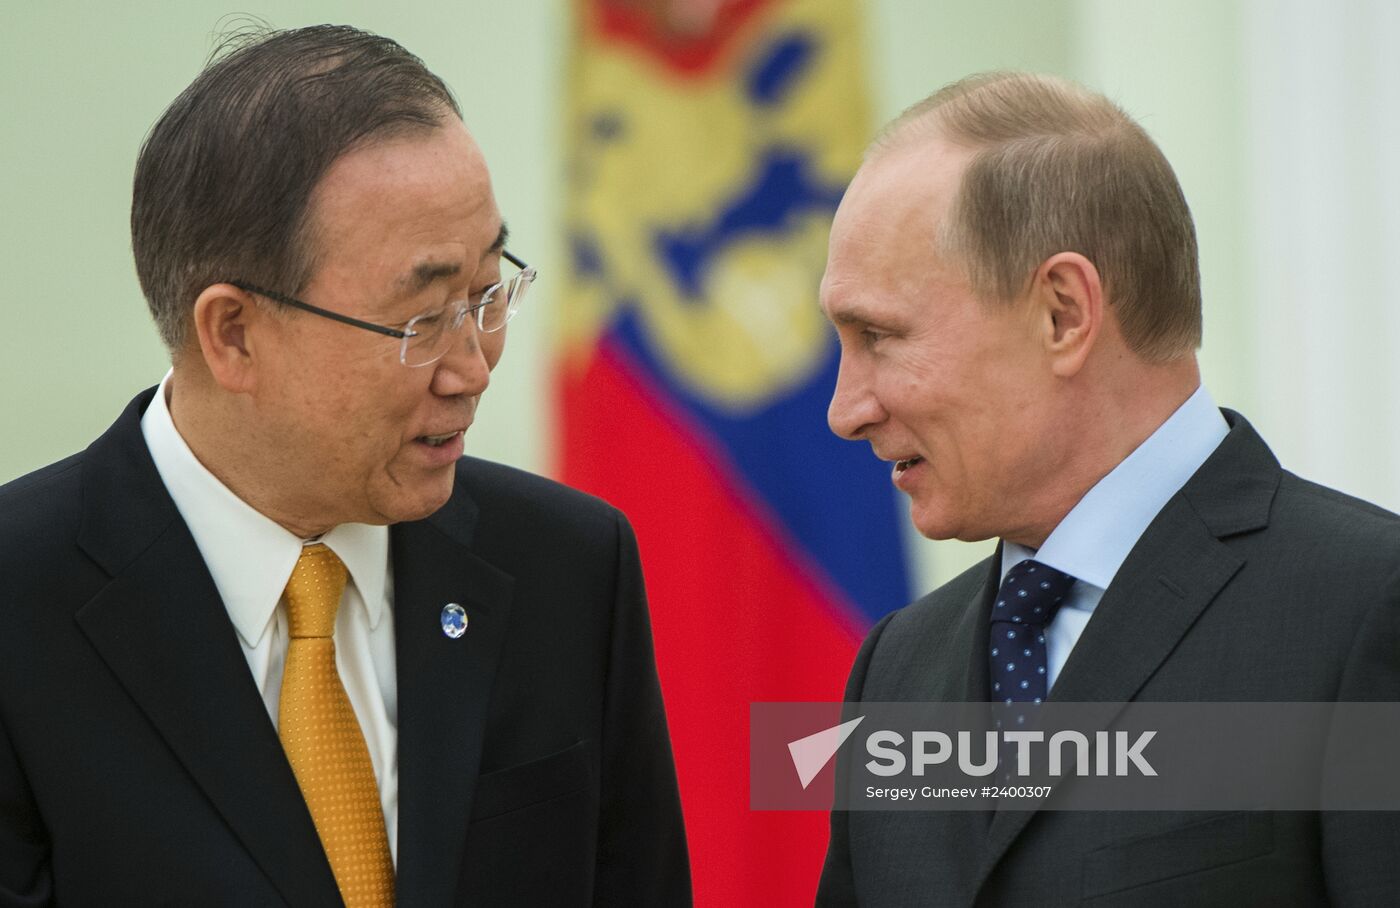 Vladimir Putin meets Ban Ki-moon